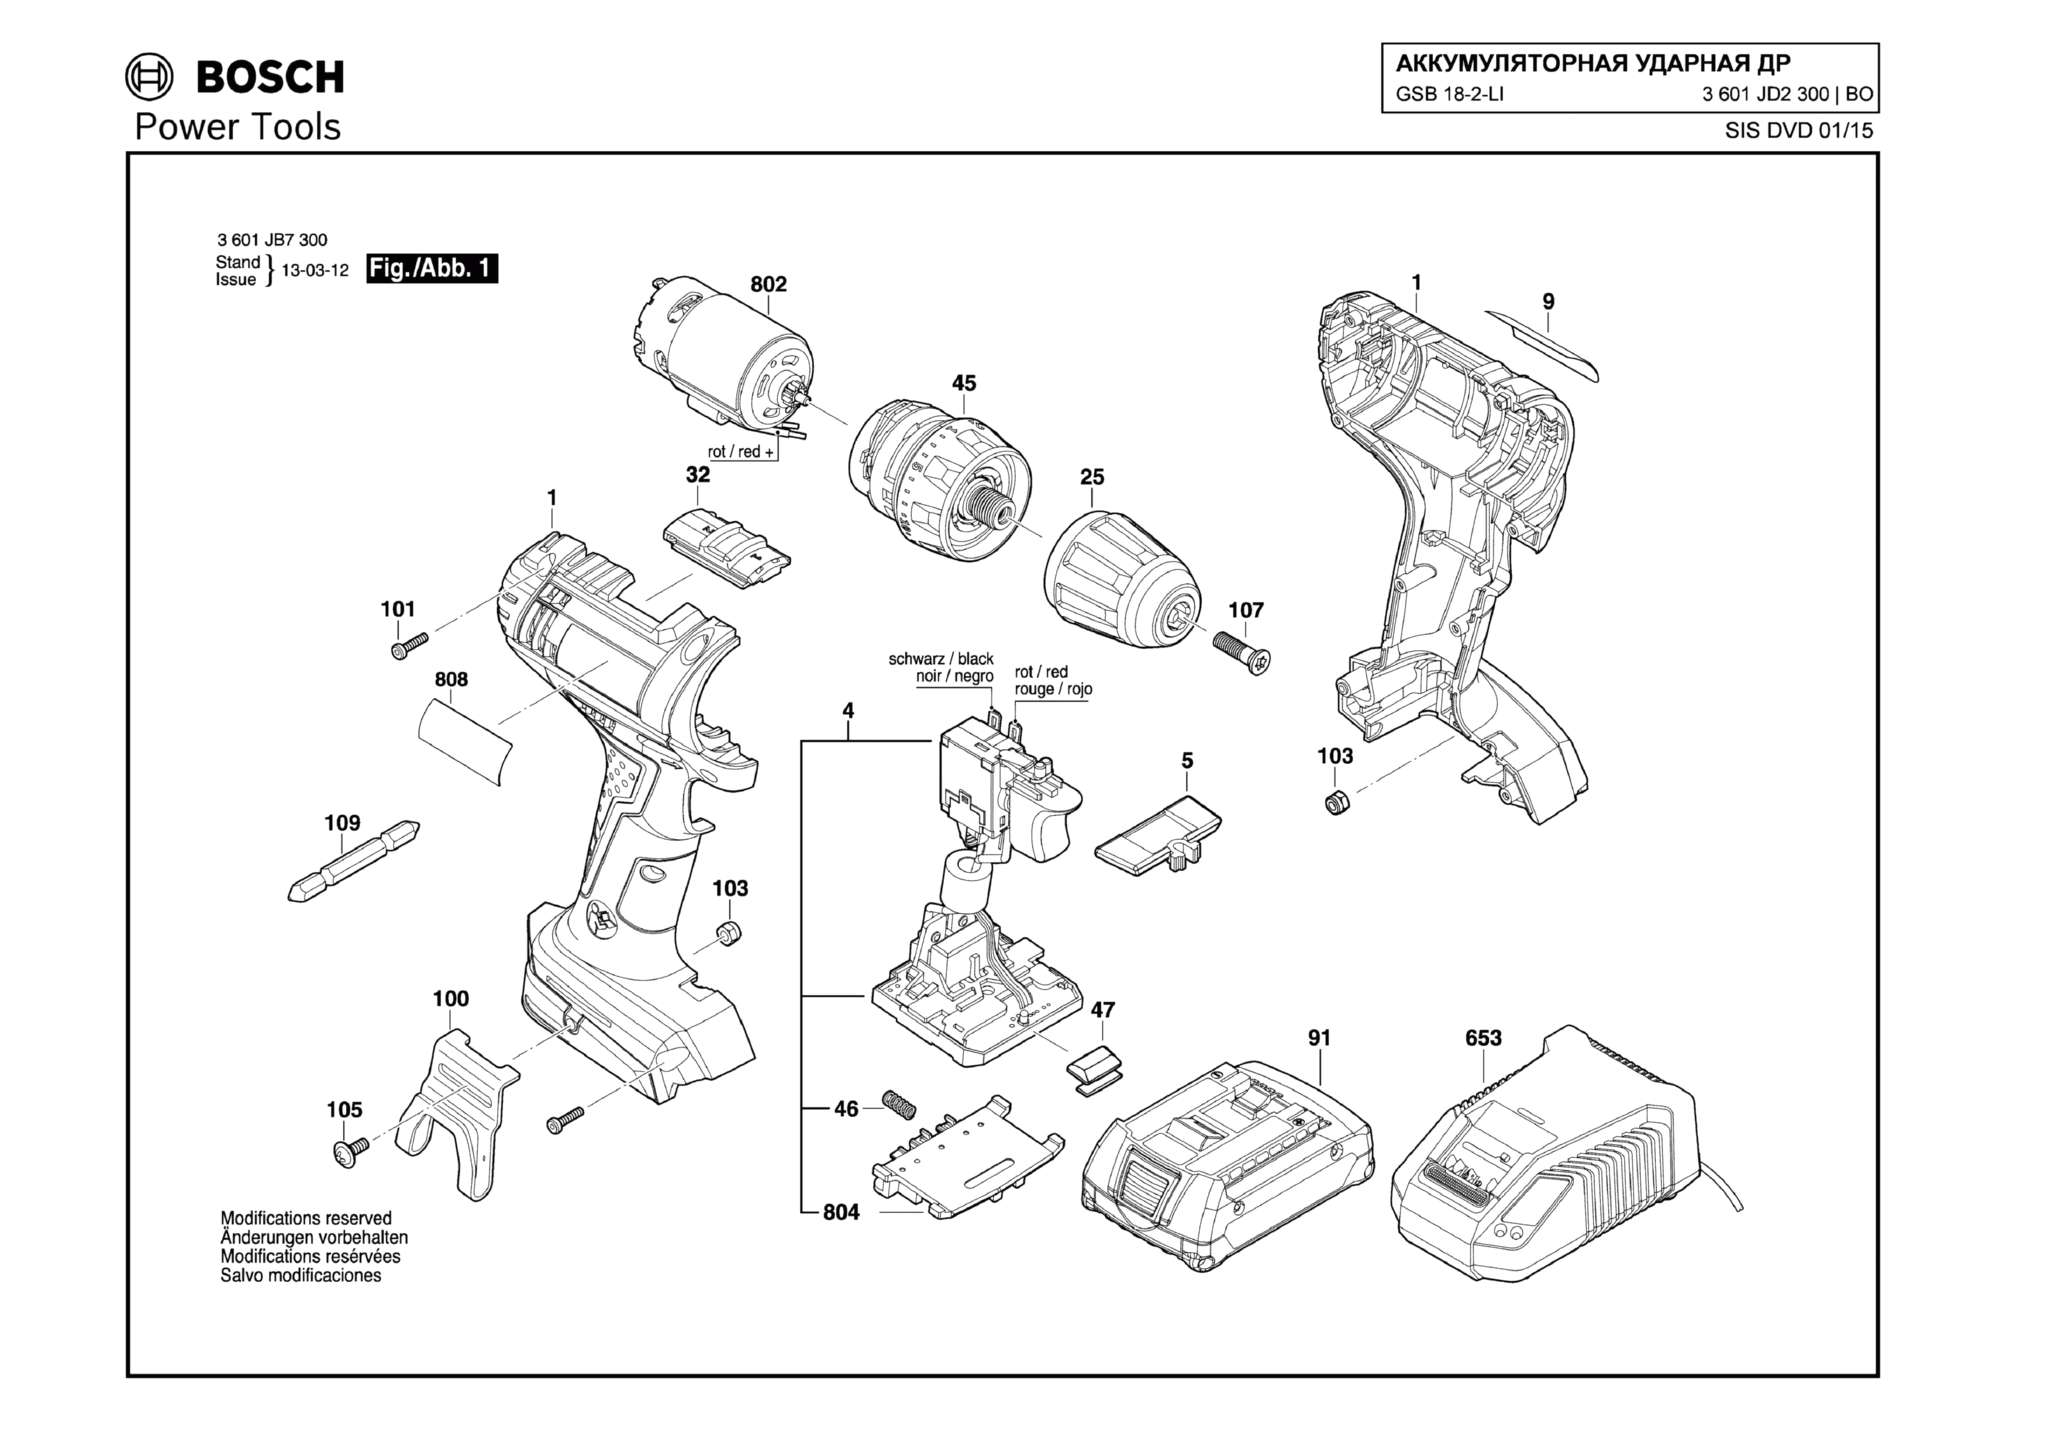 Запчасти, схема и деталировка Bosch GSB 18-2-LI (ТИП 3601JD2300)